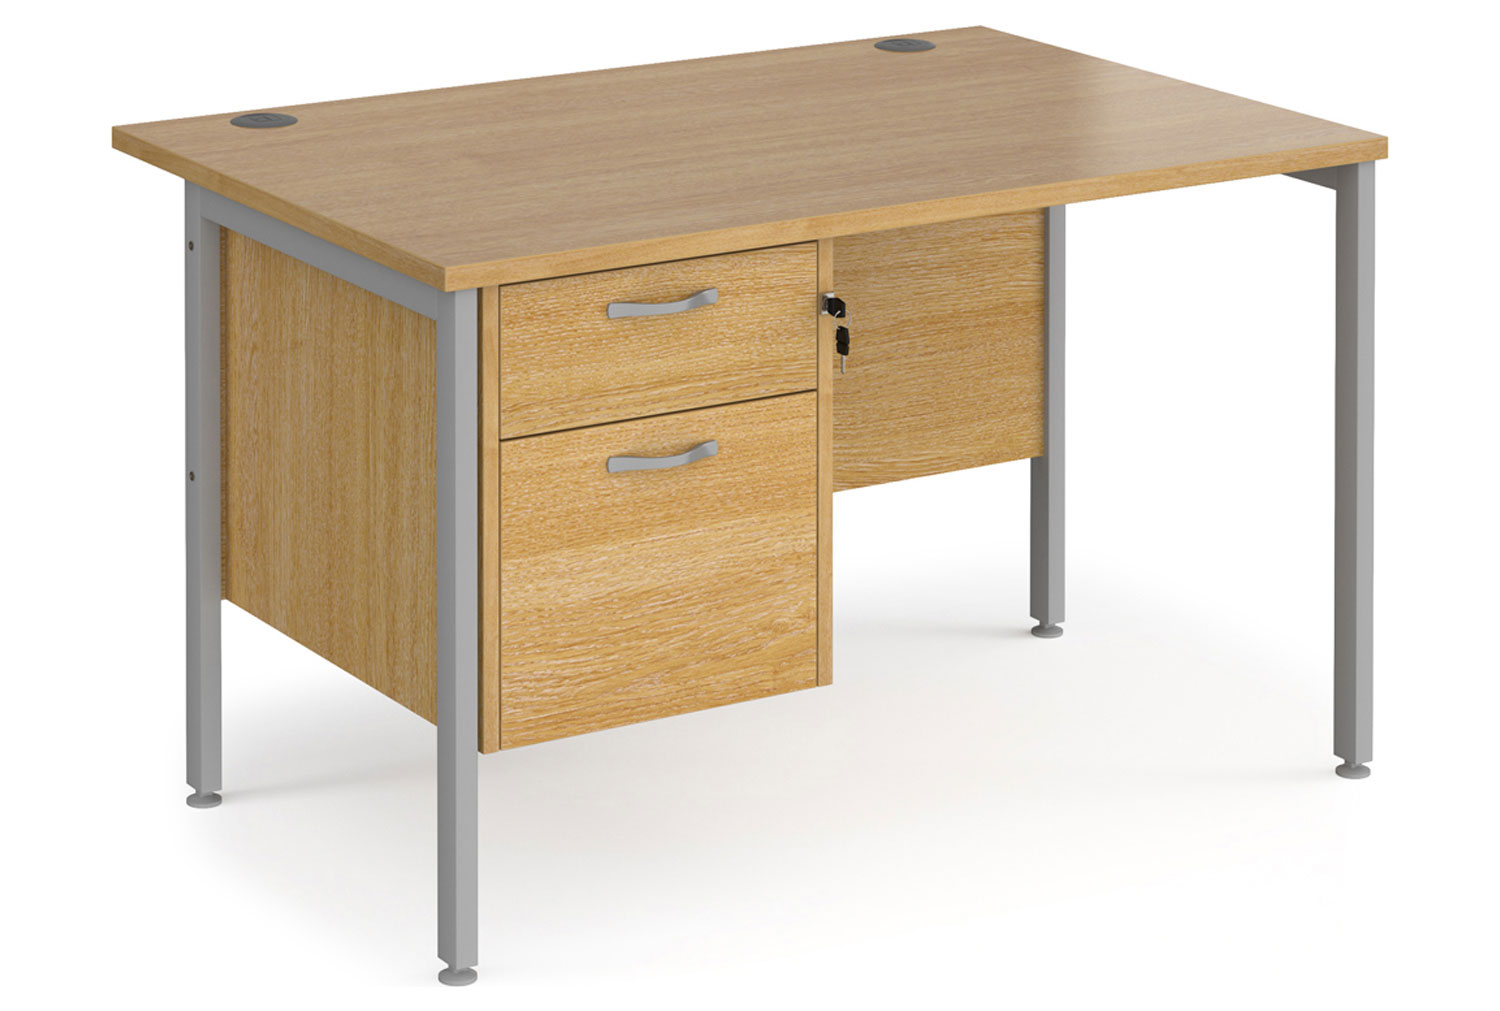 Value Line Deluxe H-Leg Rectangular Office Desk 2 Drawers (Silver Legs), 120wx80dx73h (cm), Oak